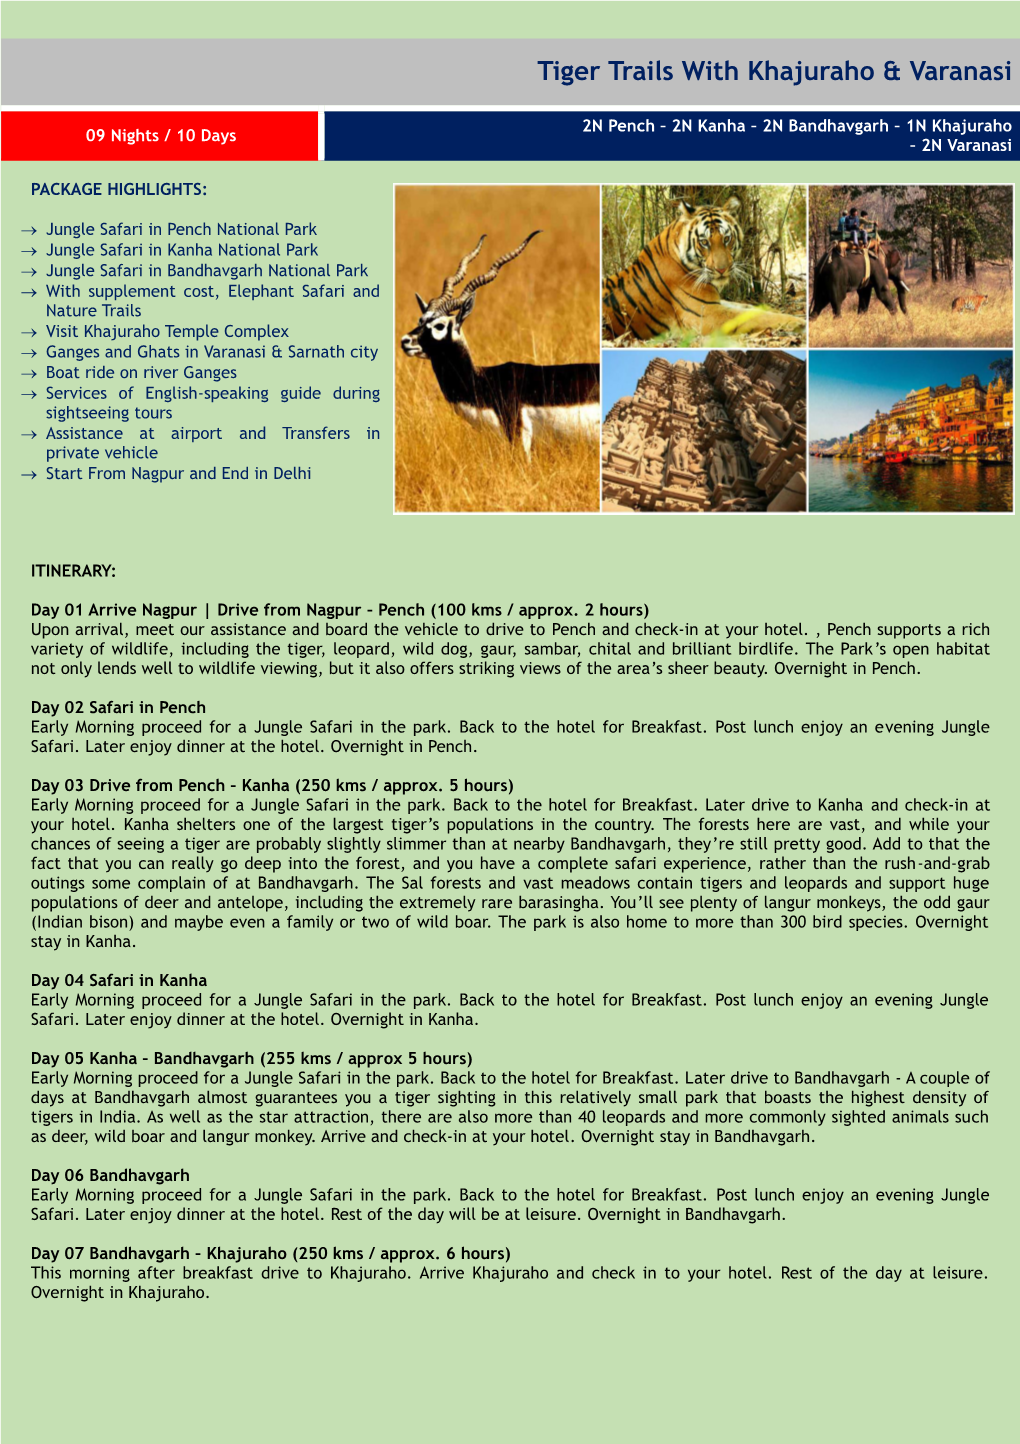 Tiger Trails with Khajuraho & Varanasi